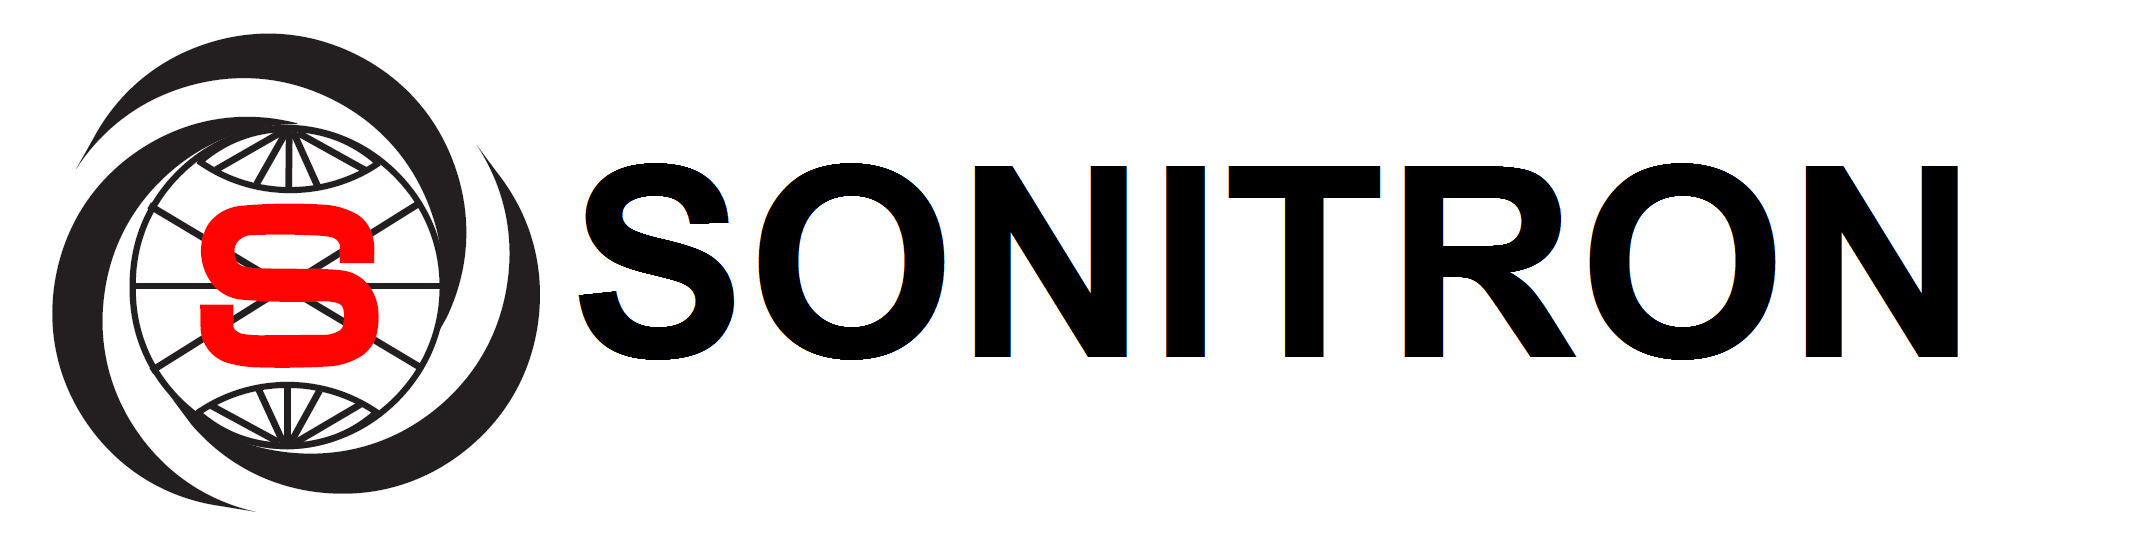 Sonitron